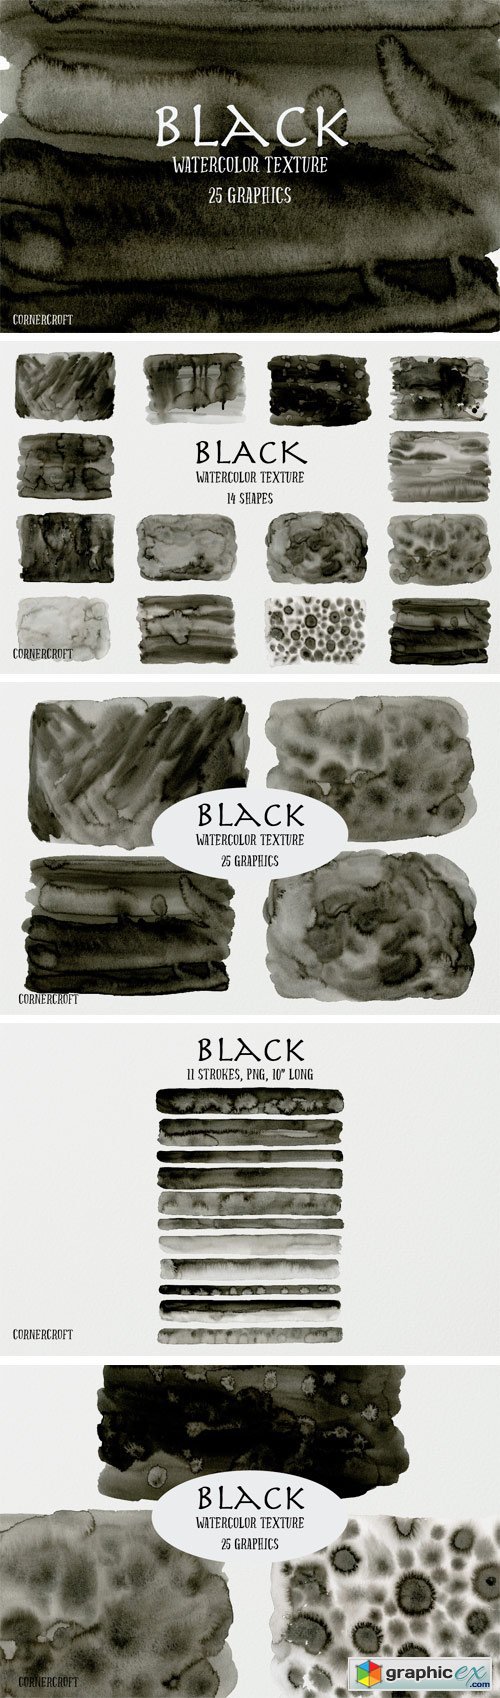 Watercolor Texture Black